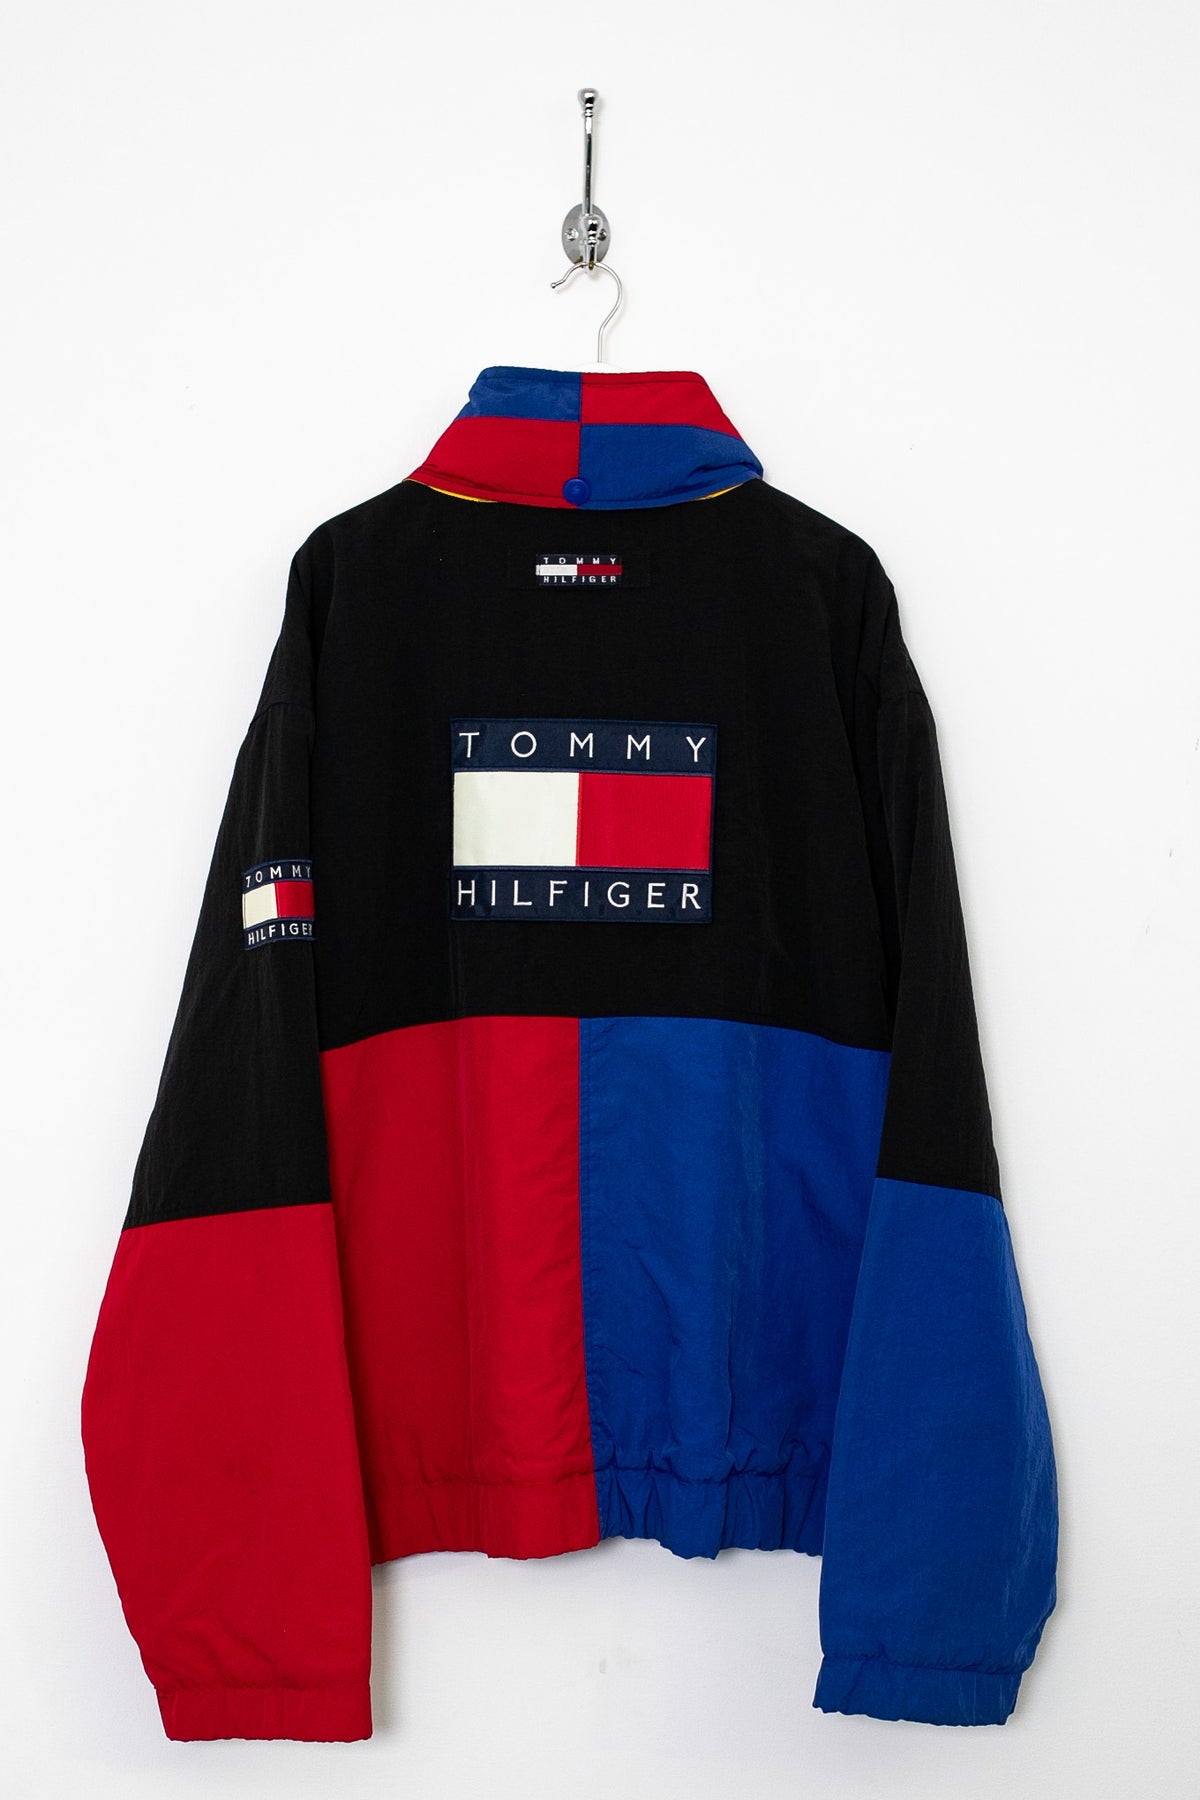 90s Tommy Hilfiger Fleece Lined Jacket (XL)